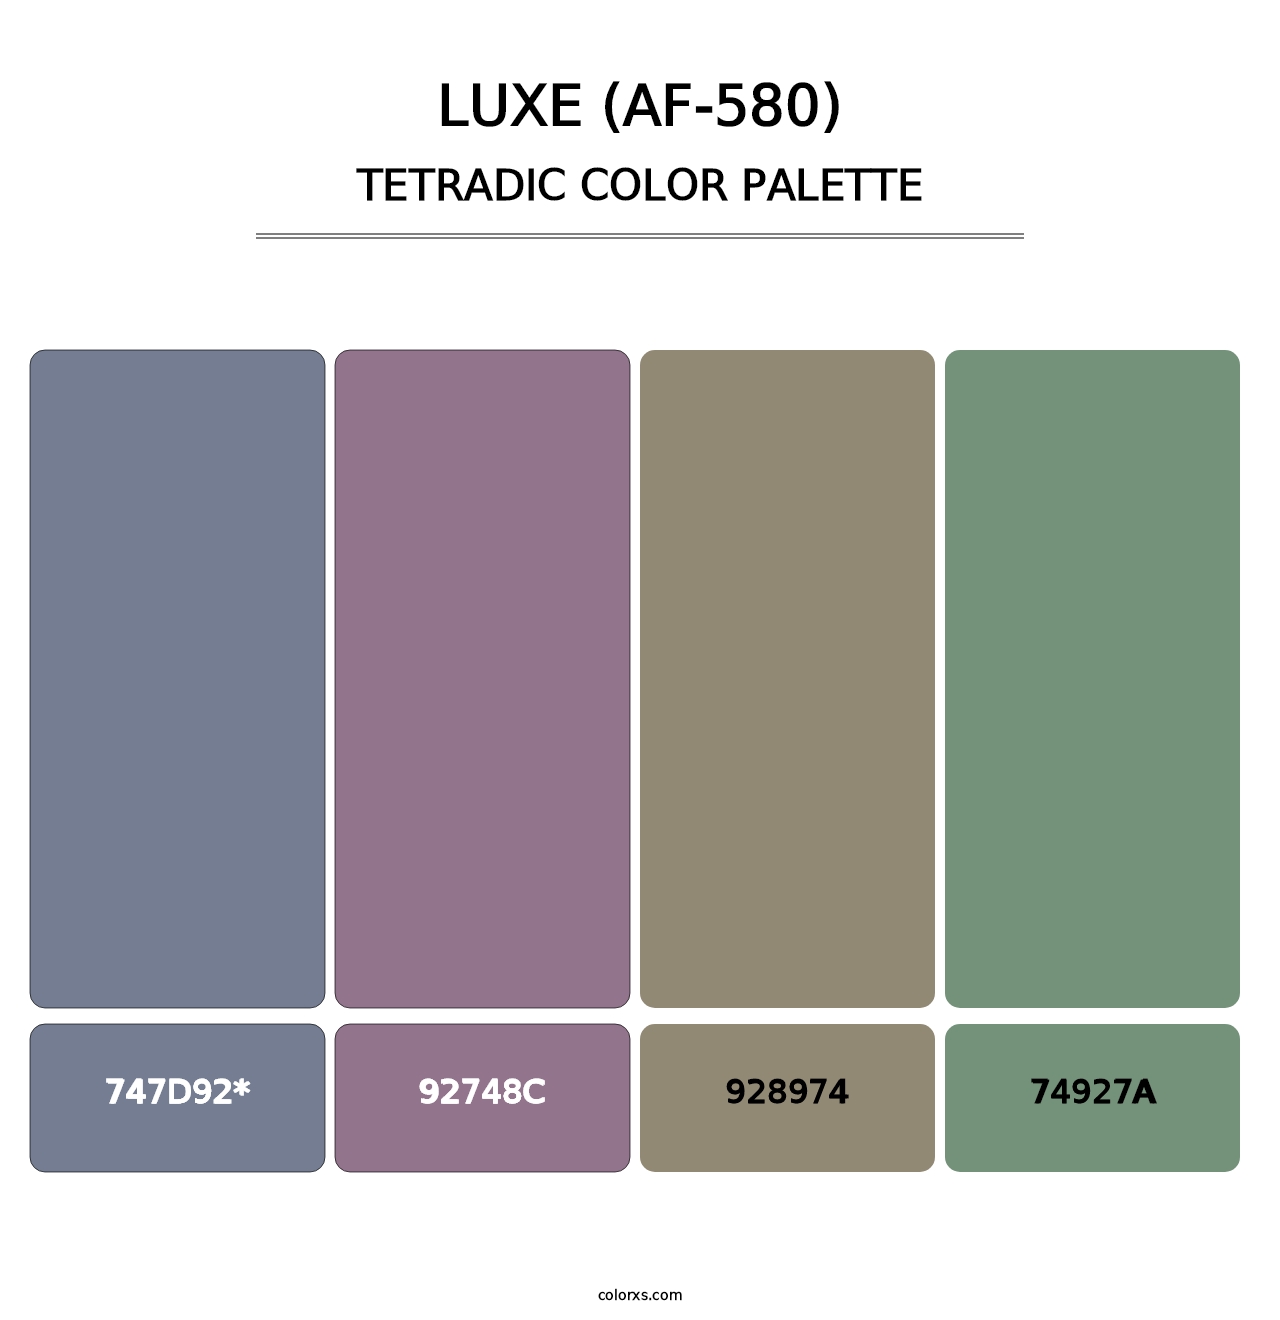 Luxe (AF-580) - Tetradic Color Palette